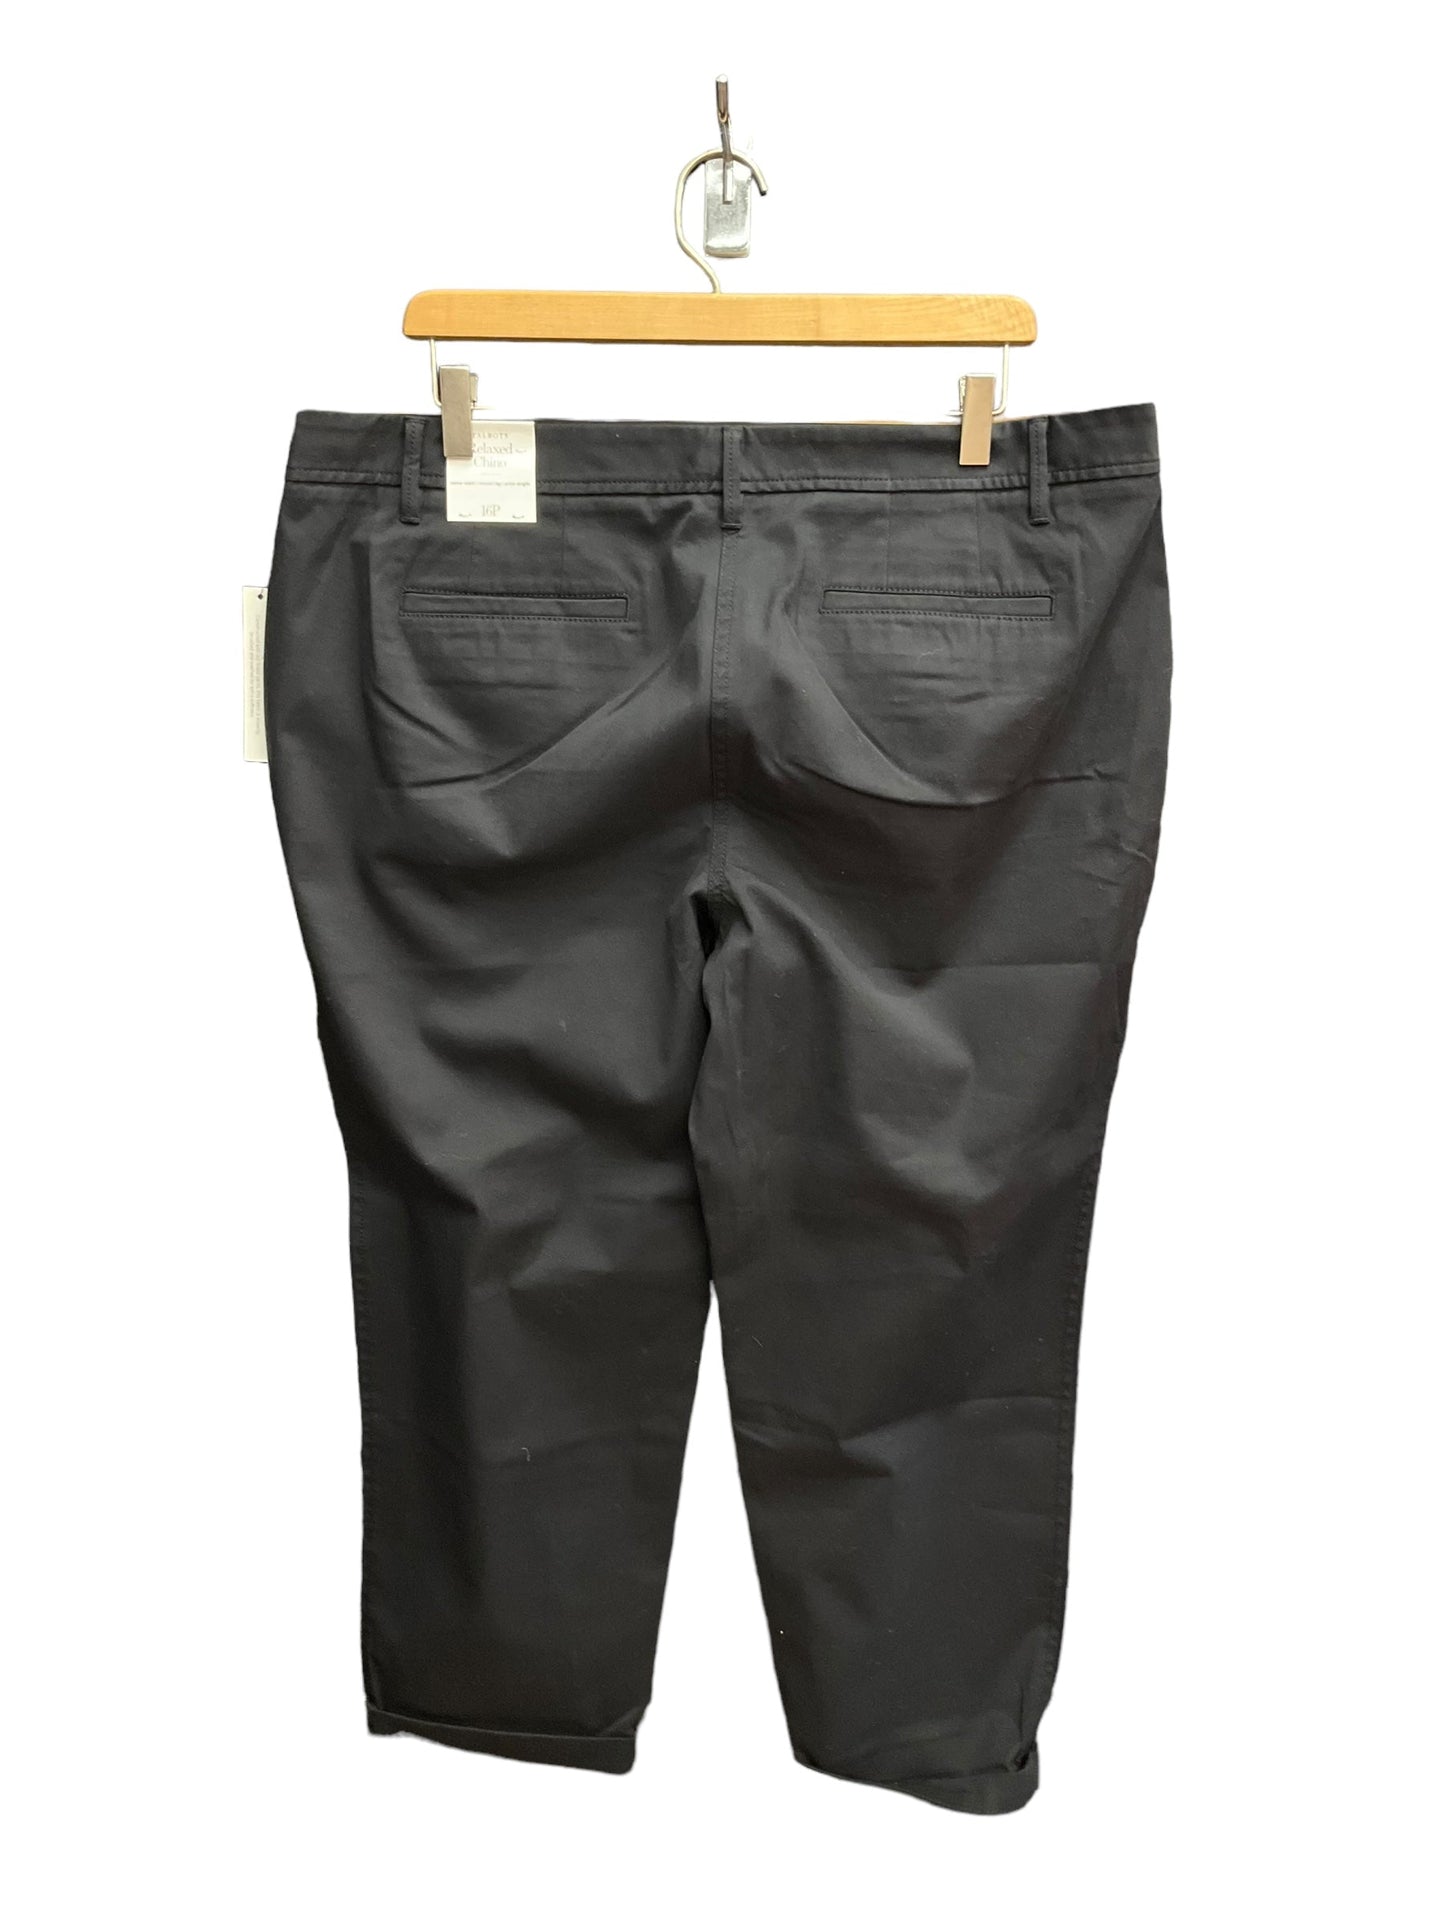 Black Pants Chinos & Khakis Talbots, Size 16